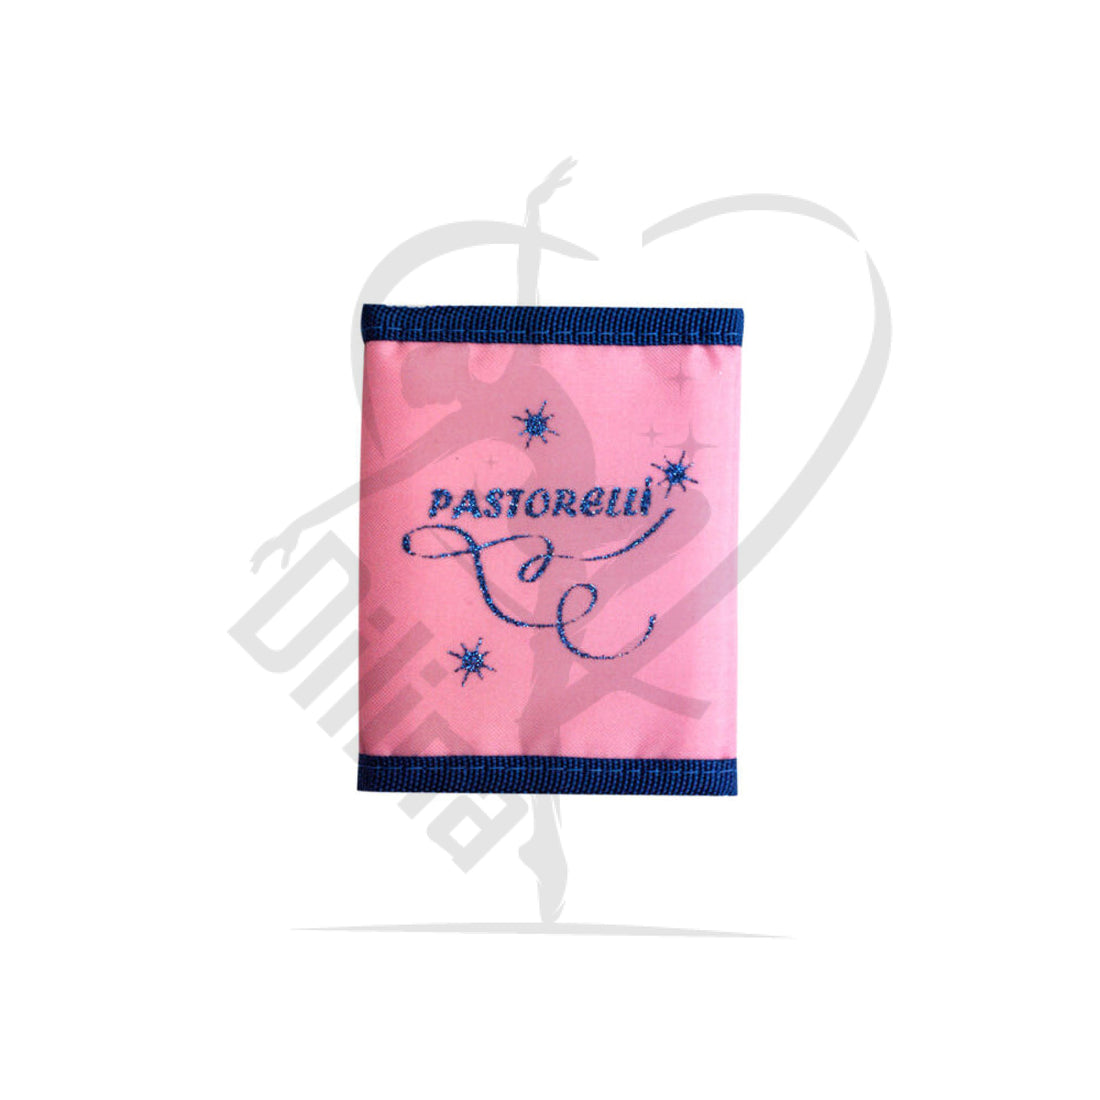 Pastorelli Purse Ribbon Winder Pink Accessories